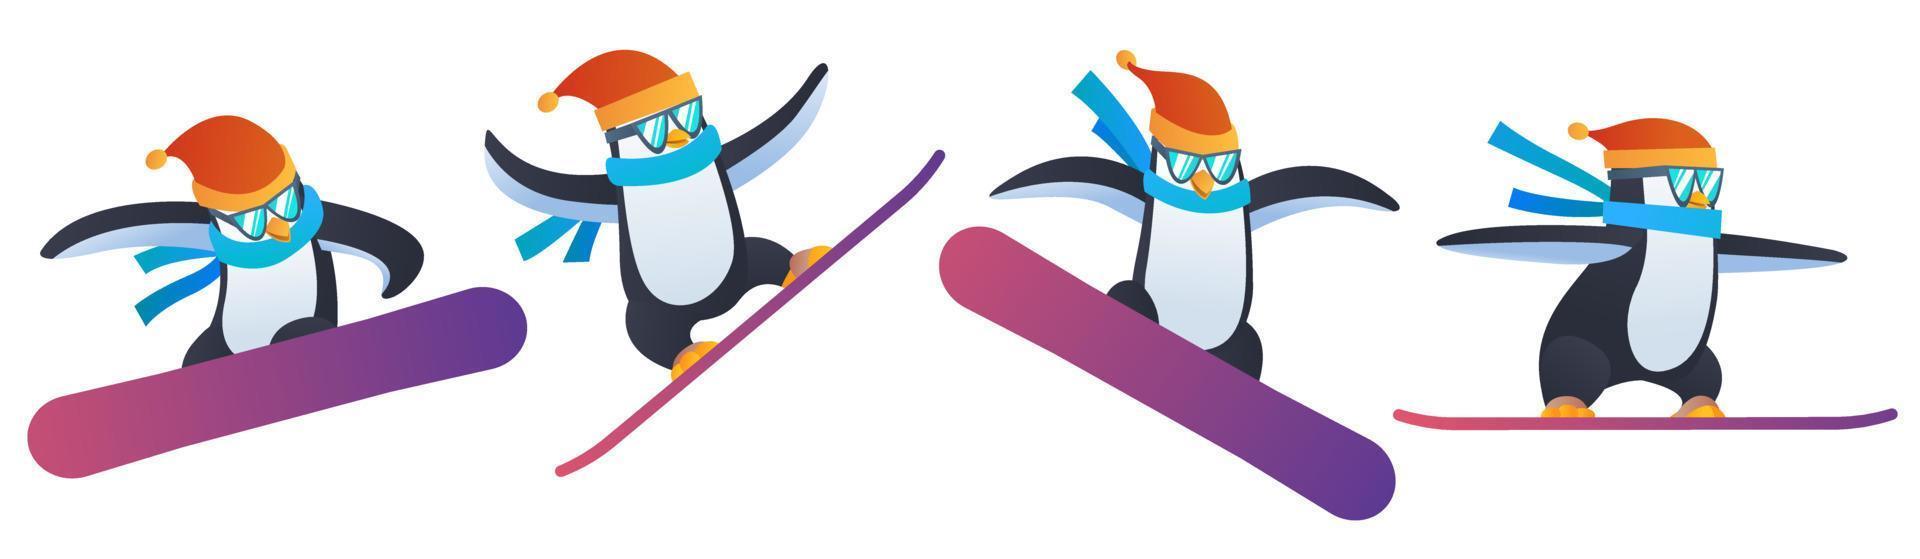 pingüino snowboard en varias poses carácter vector